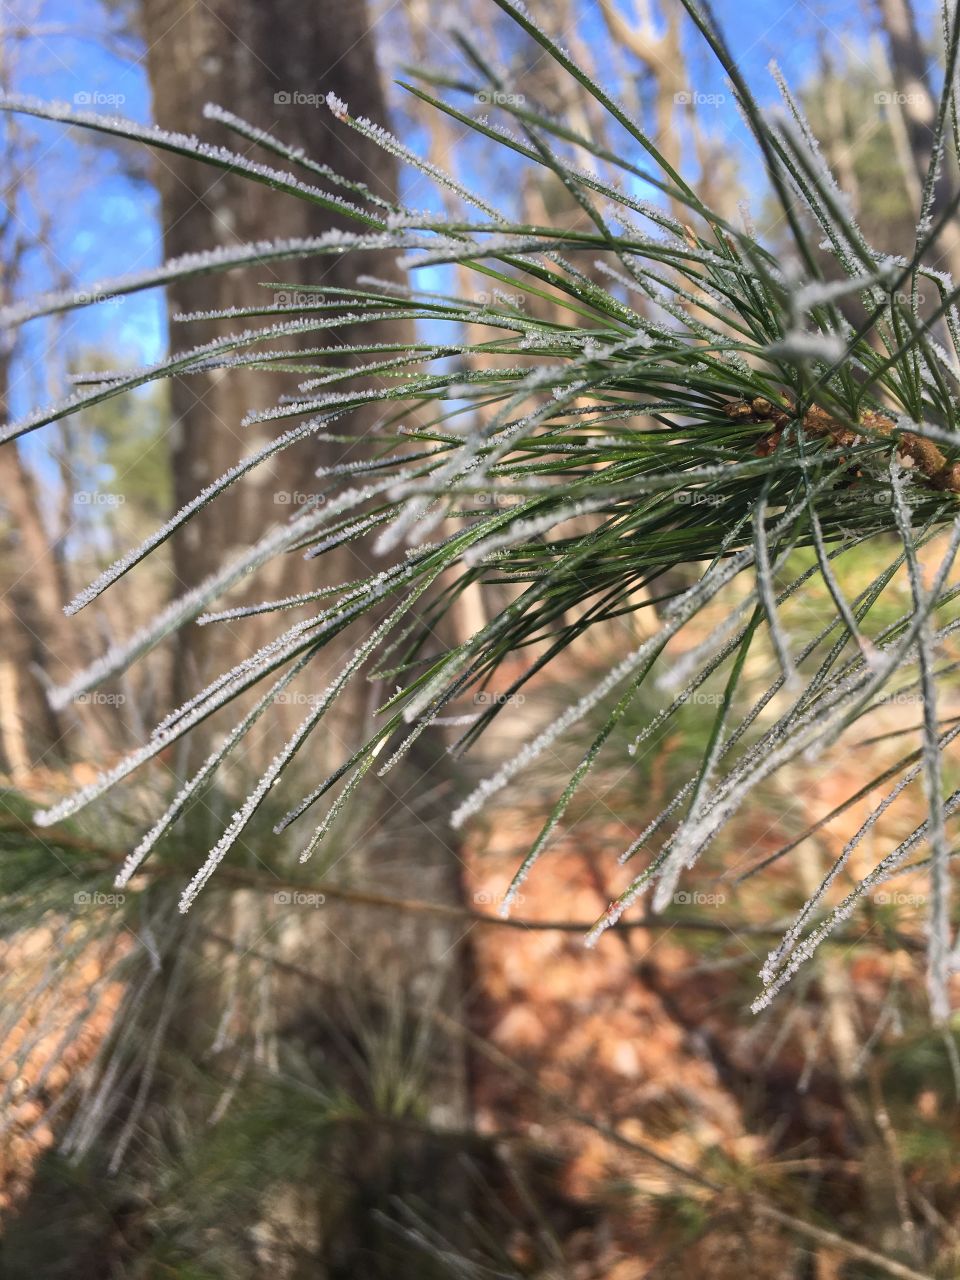 Ice on the Pine